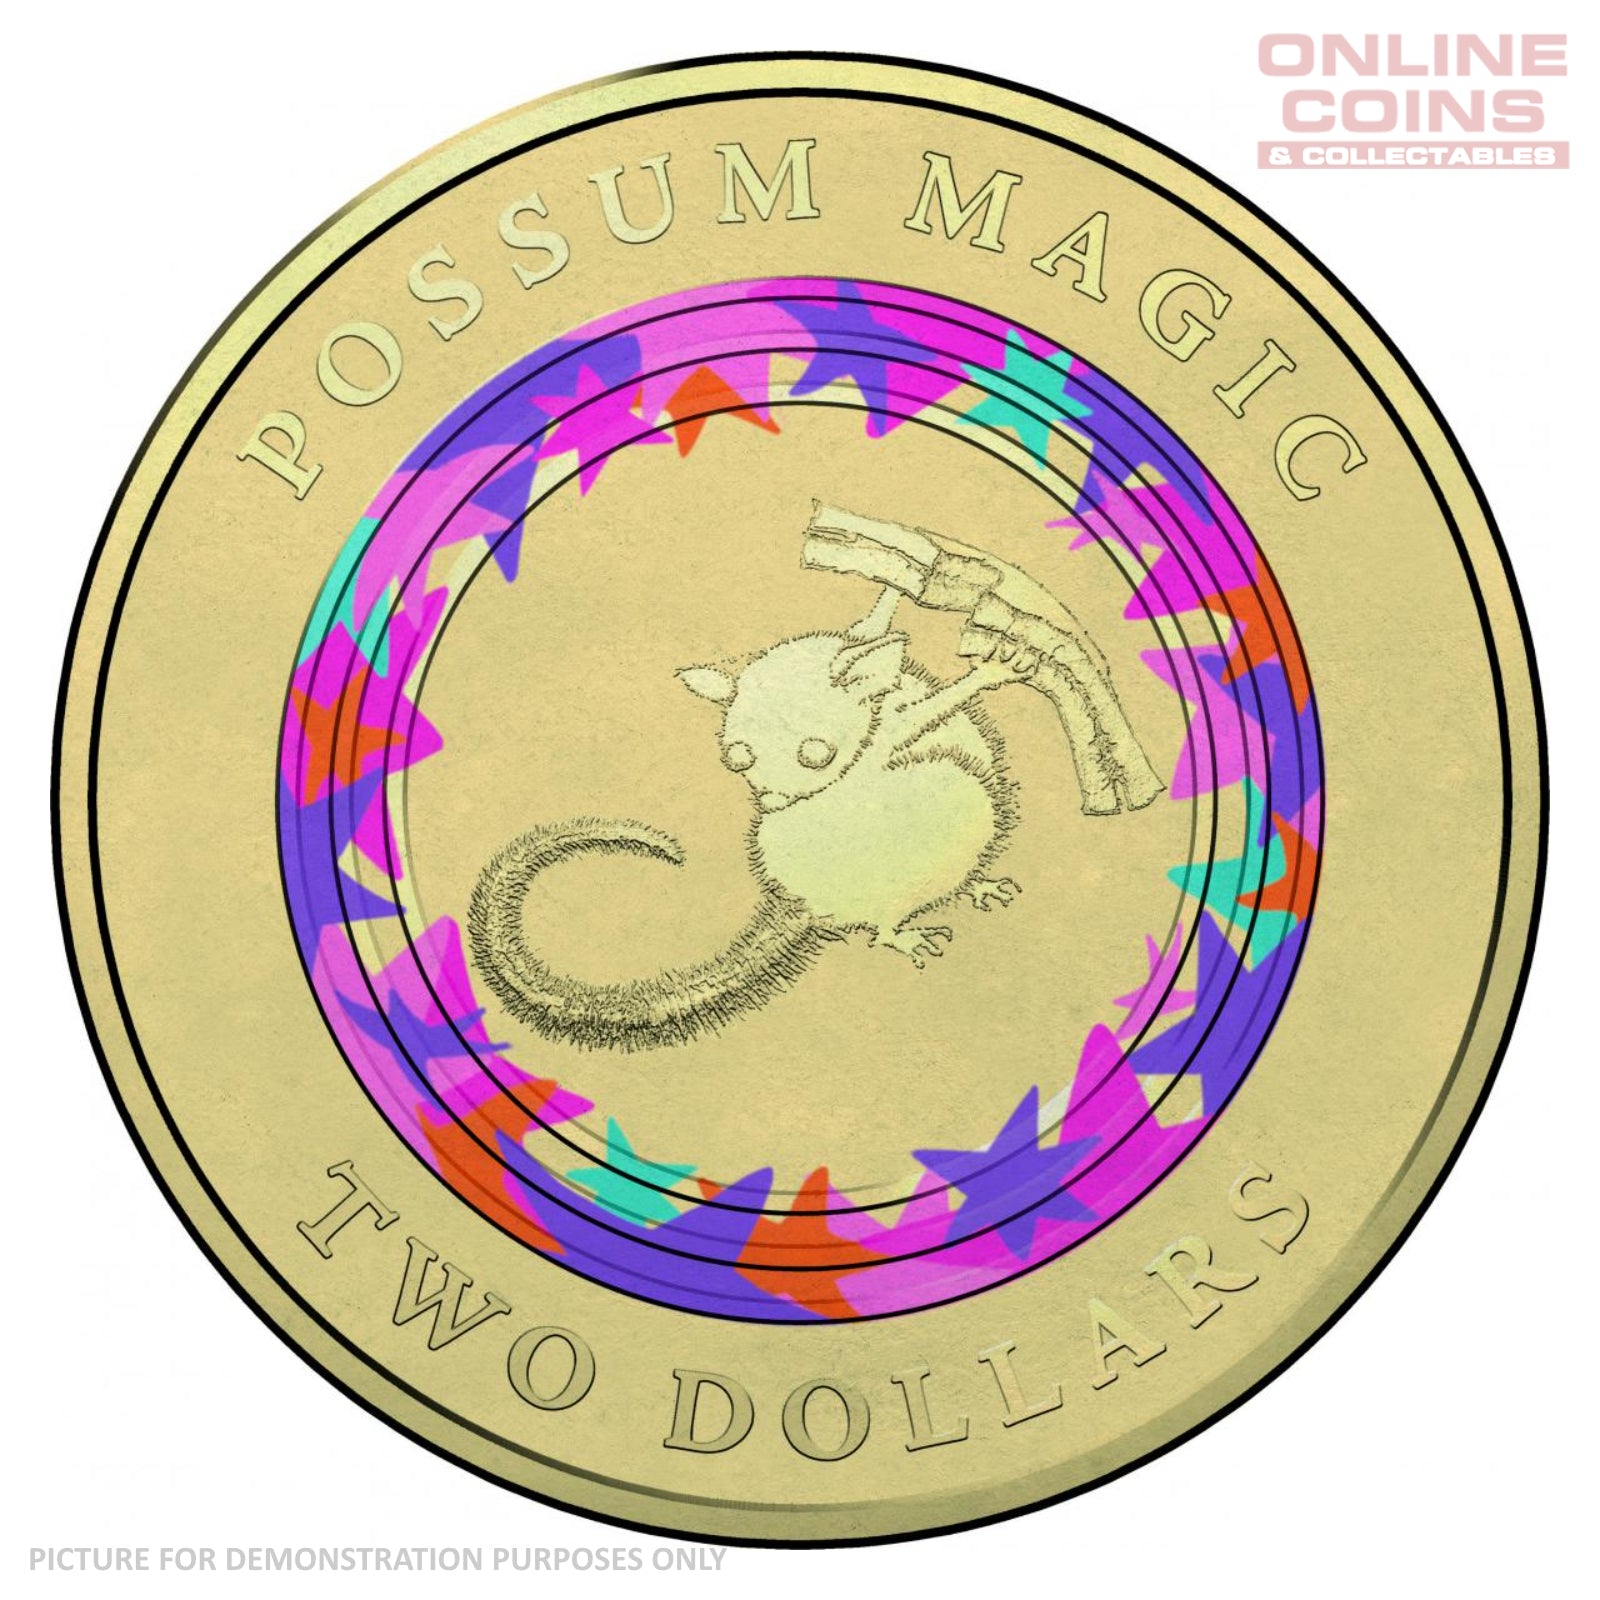 2017 Possum Magic Colour $2 Limited Mintage Loose Coin - Vegemite Sandwich